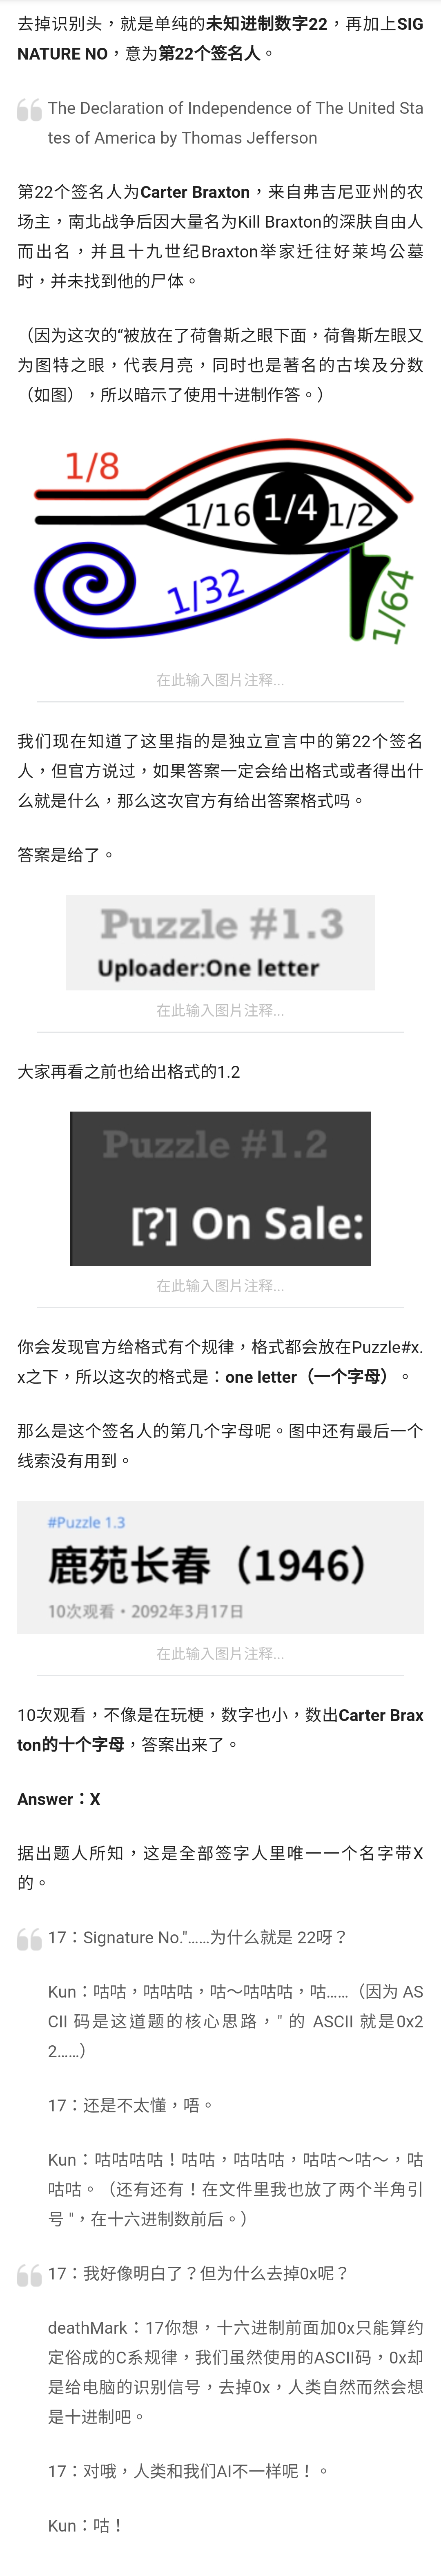 【Phigros】十七的宝藏 Puzzle #1.3谜题解密及补充_1